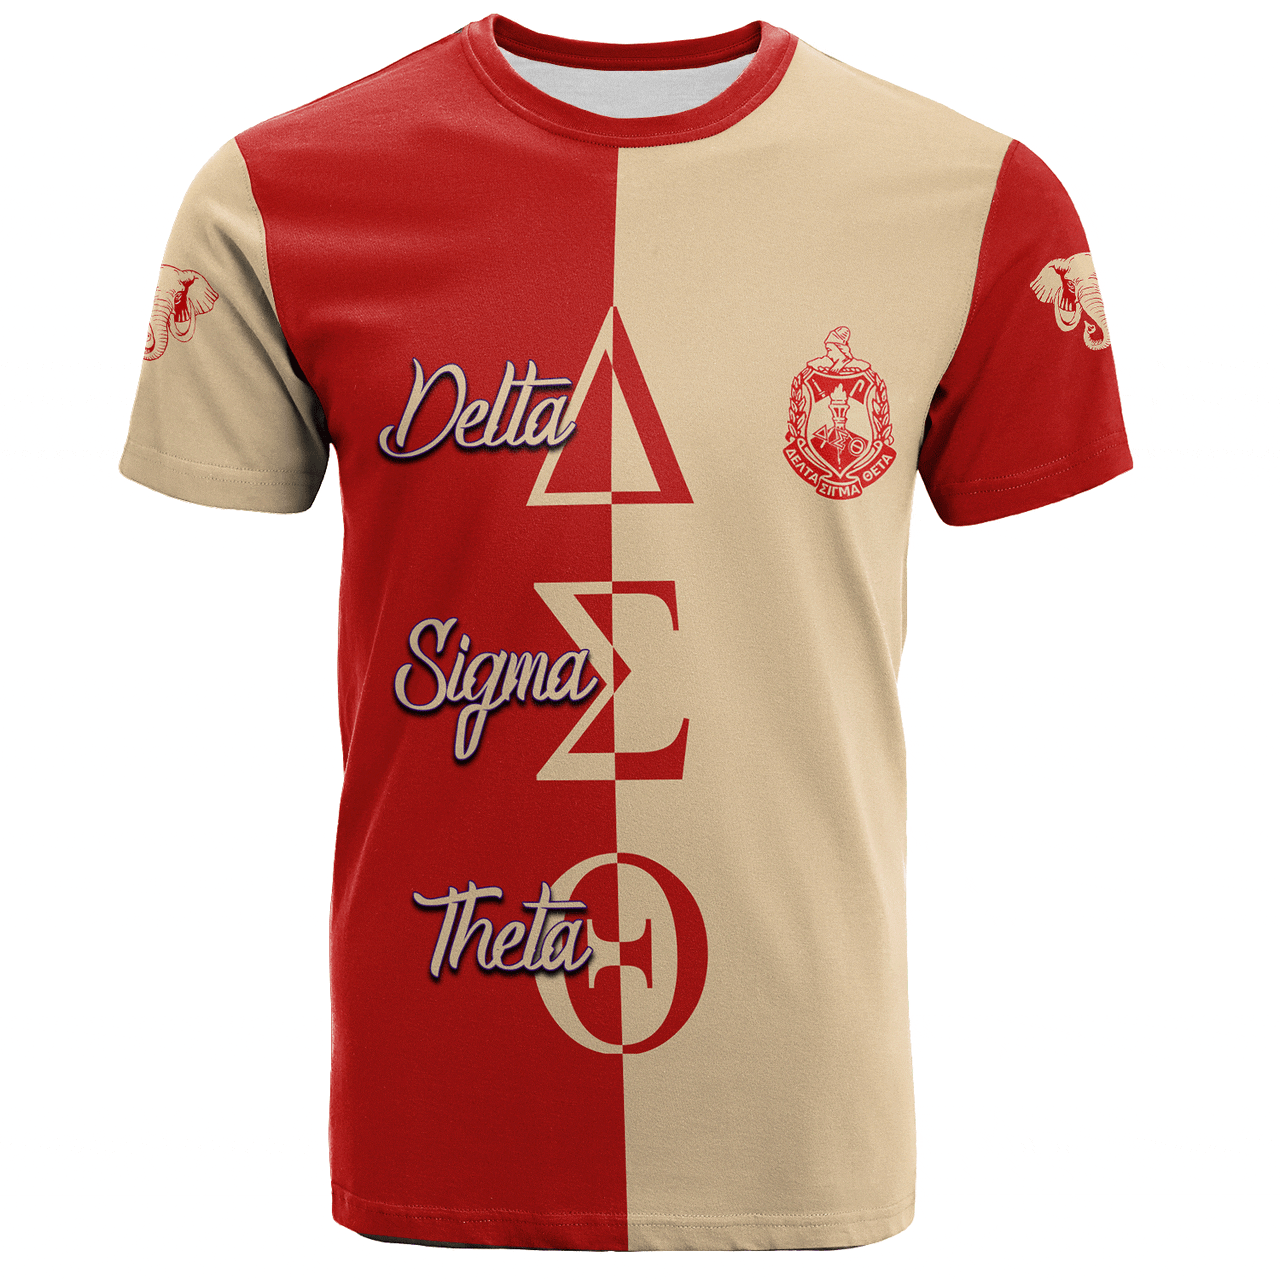 Delta Sigma Theta T-Shirt Half Style